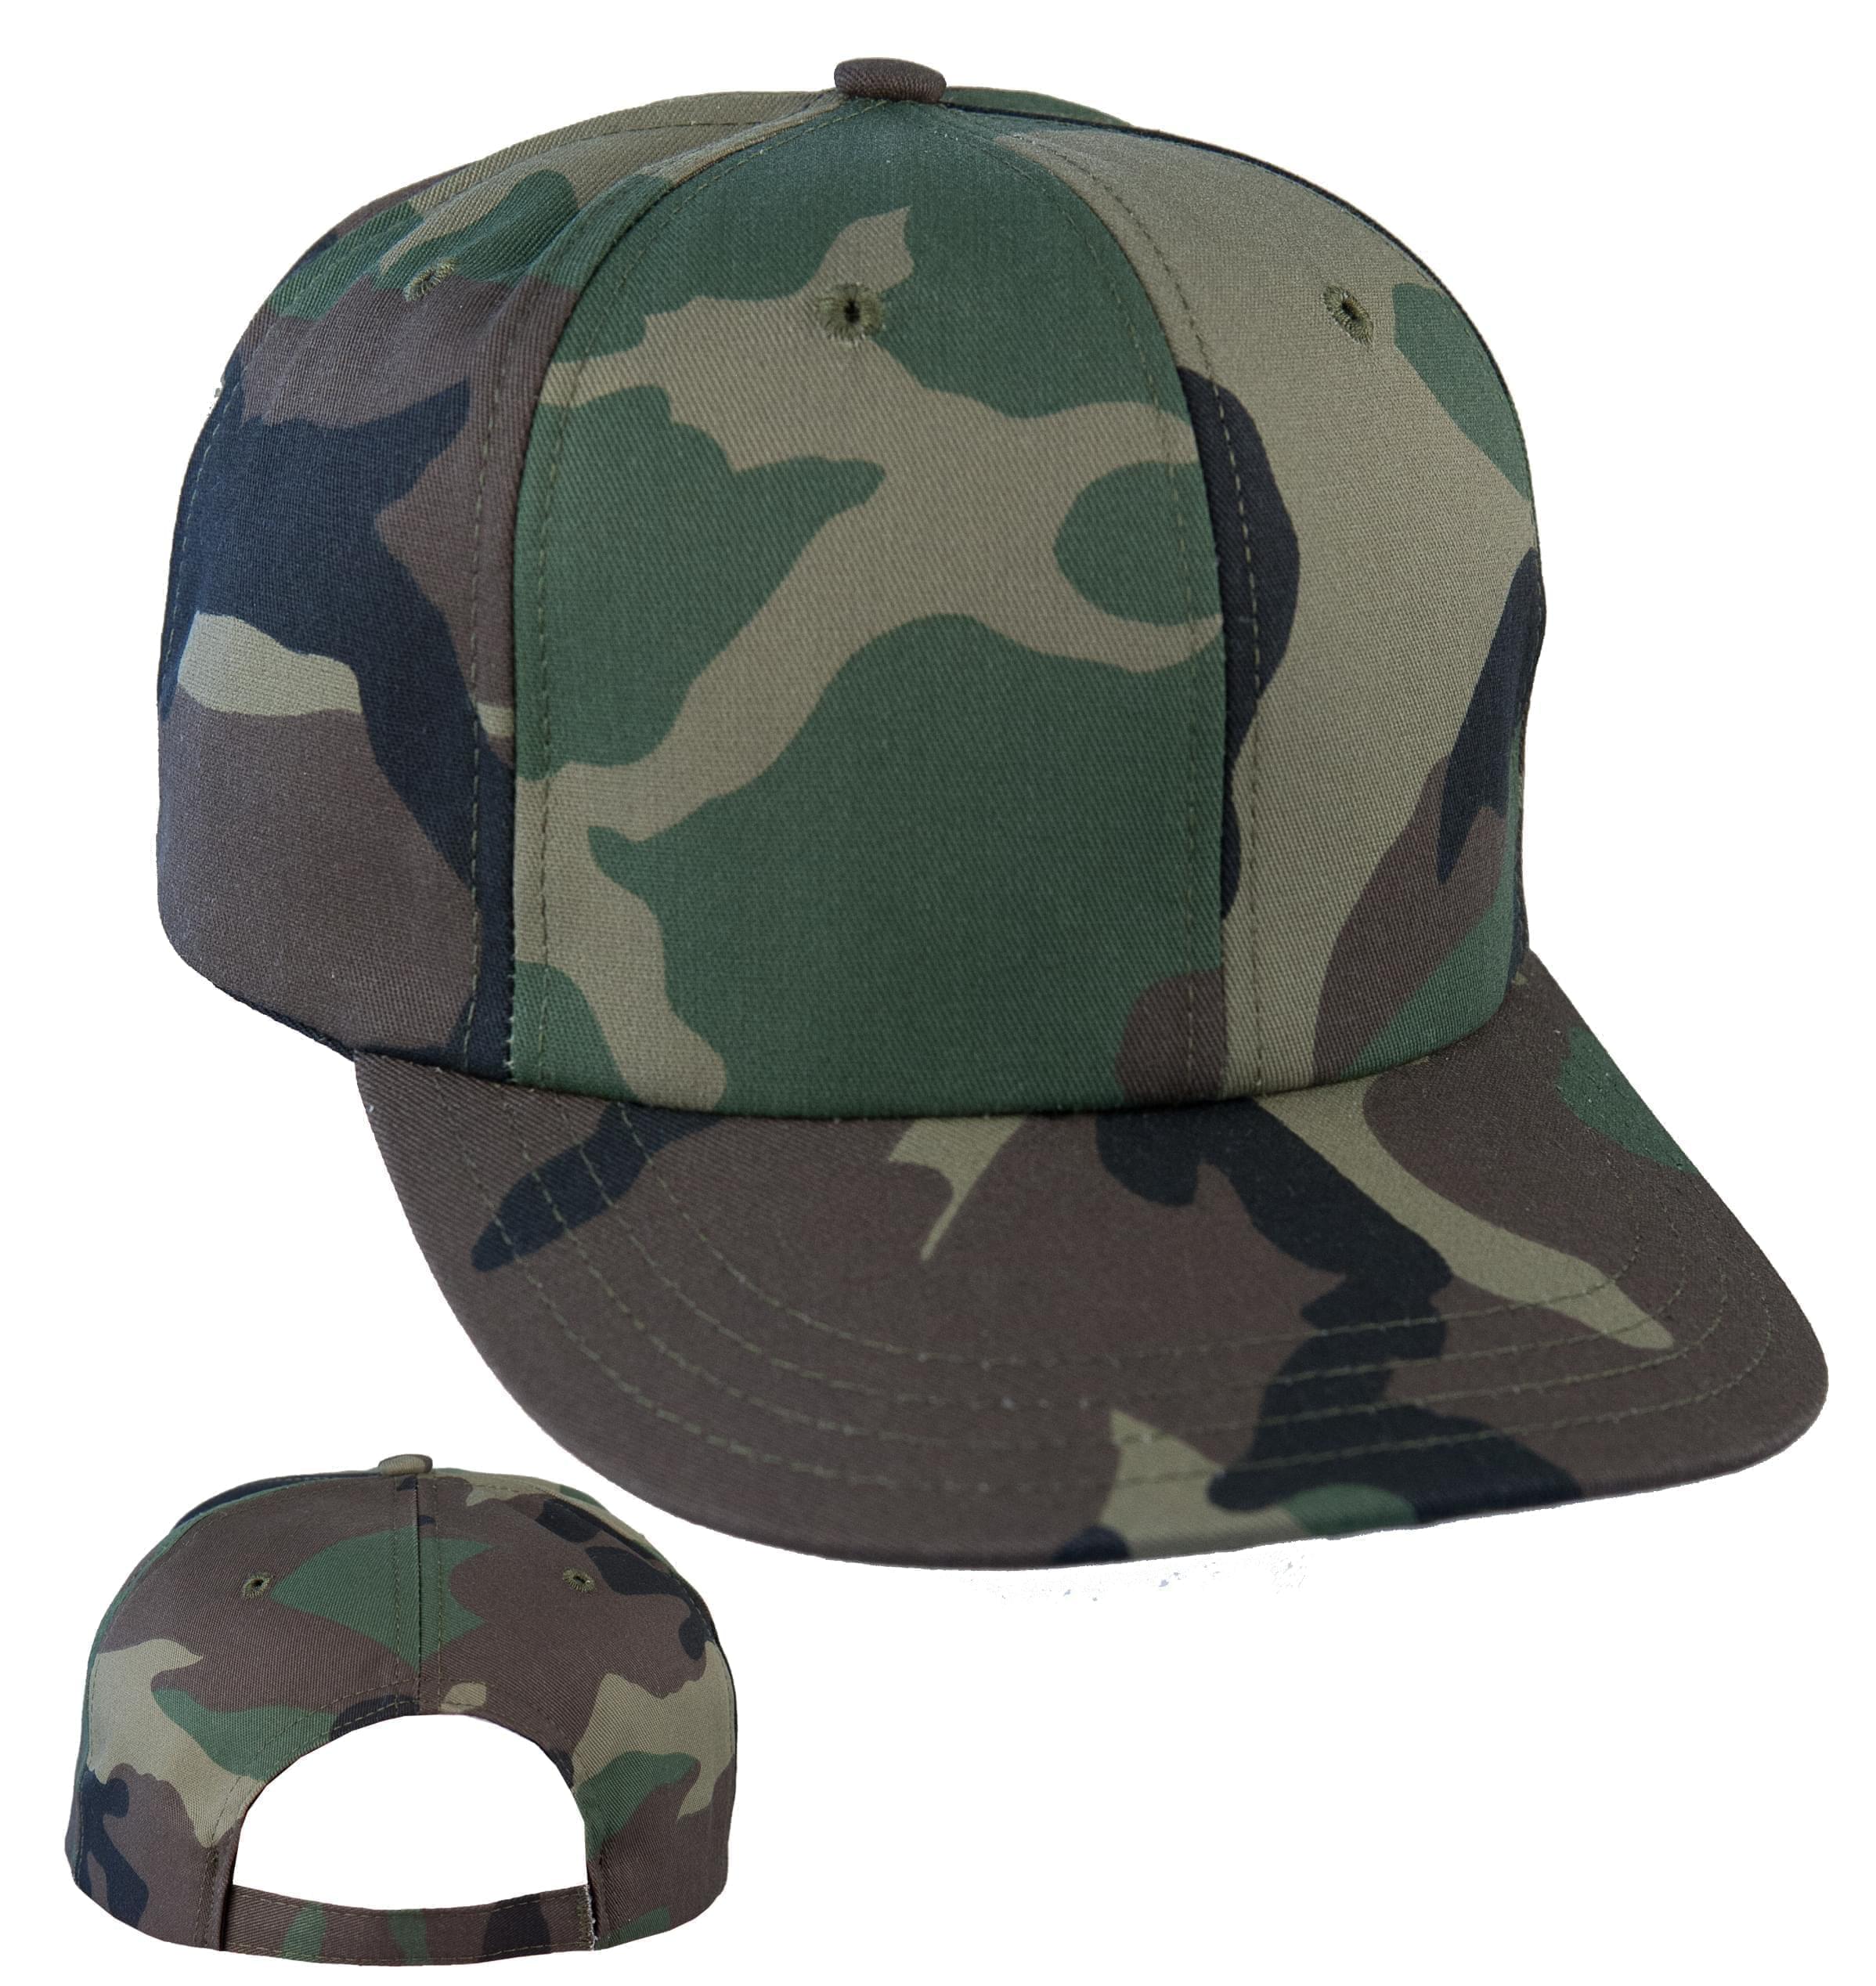 Prostyle Woodland Camo Baseball Hats Caps USA Made by Unionwear